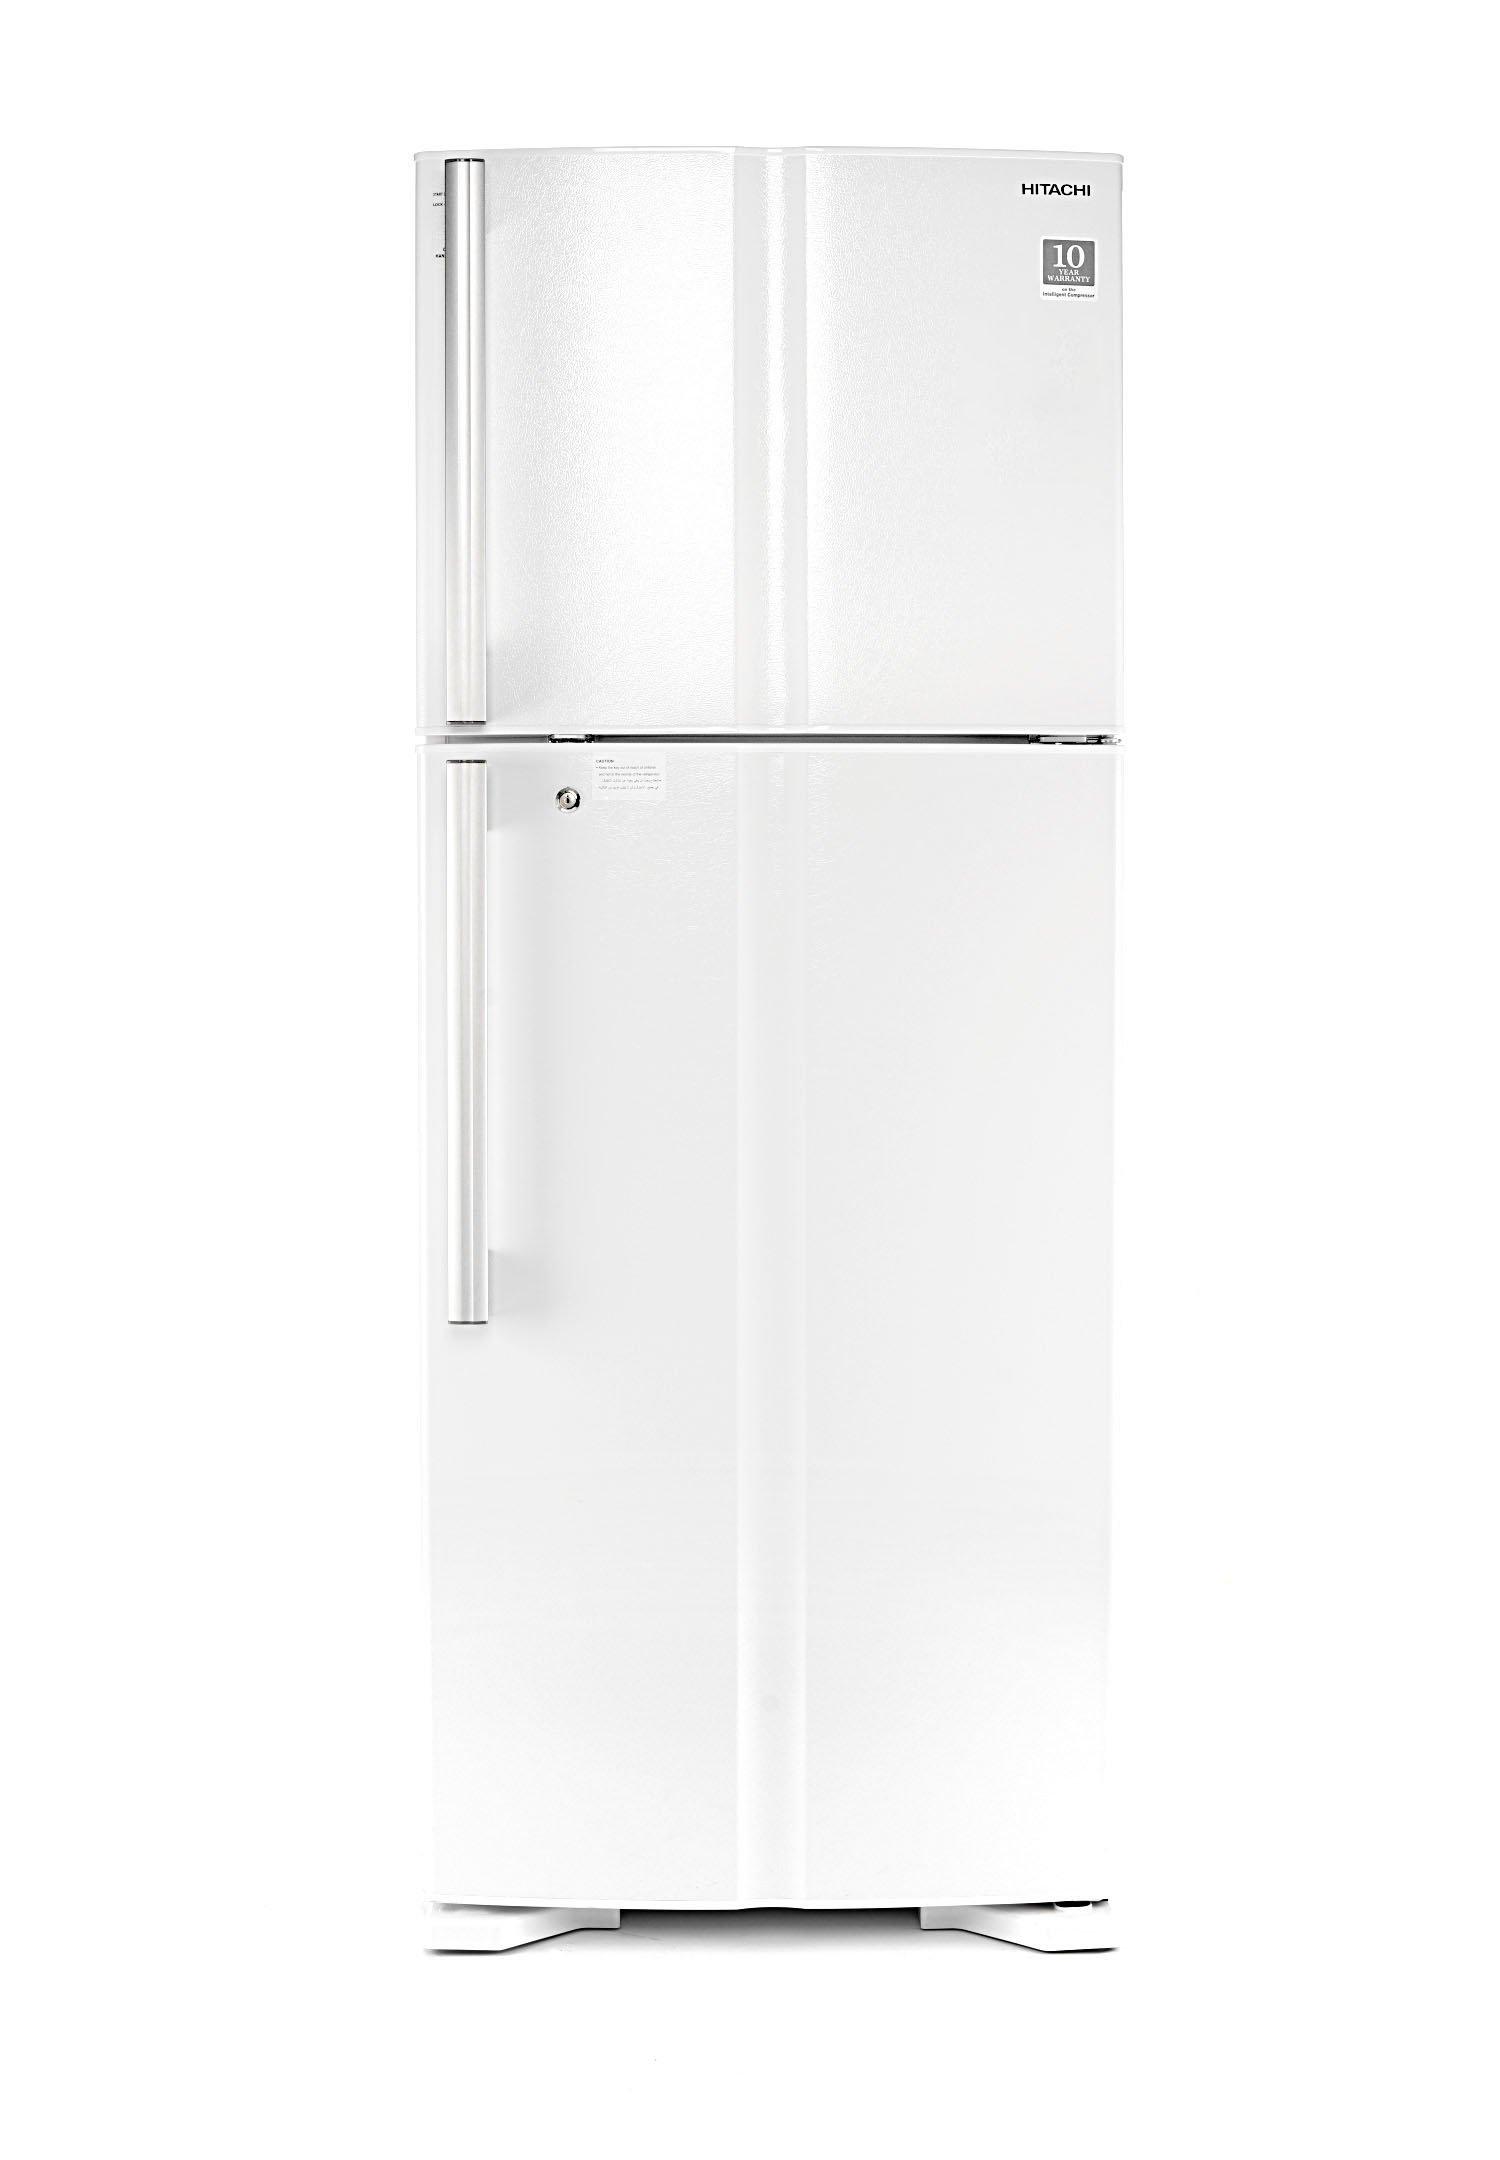 46++ Best refrigerator brand in saudi arabia ideas